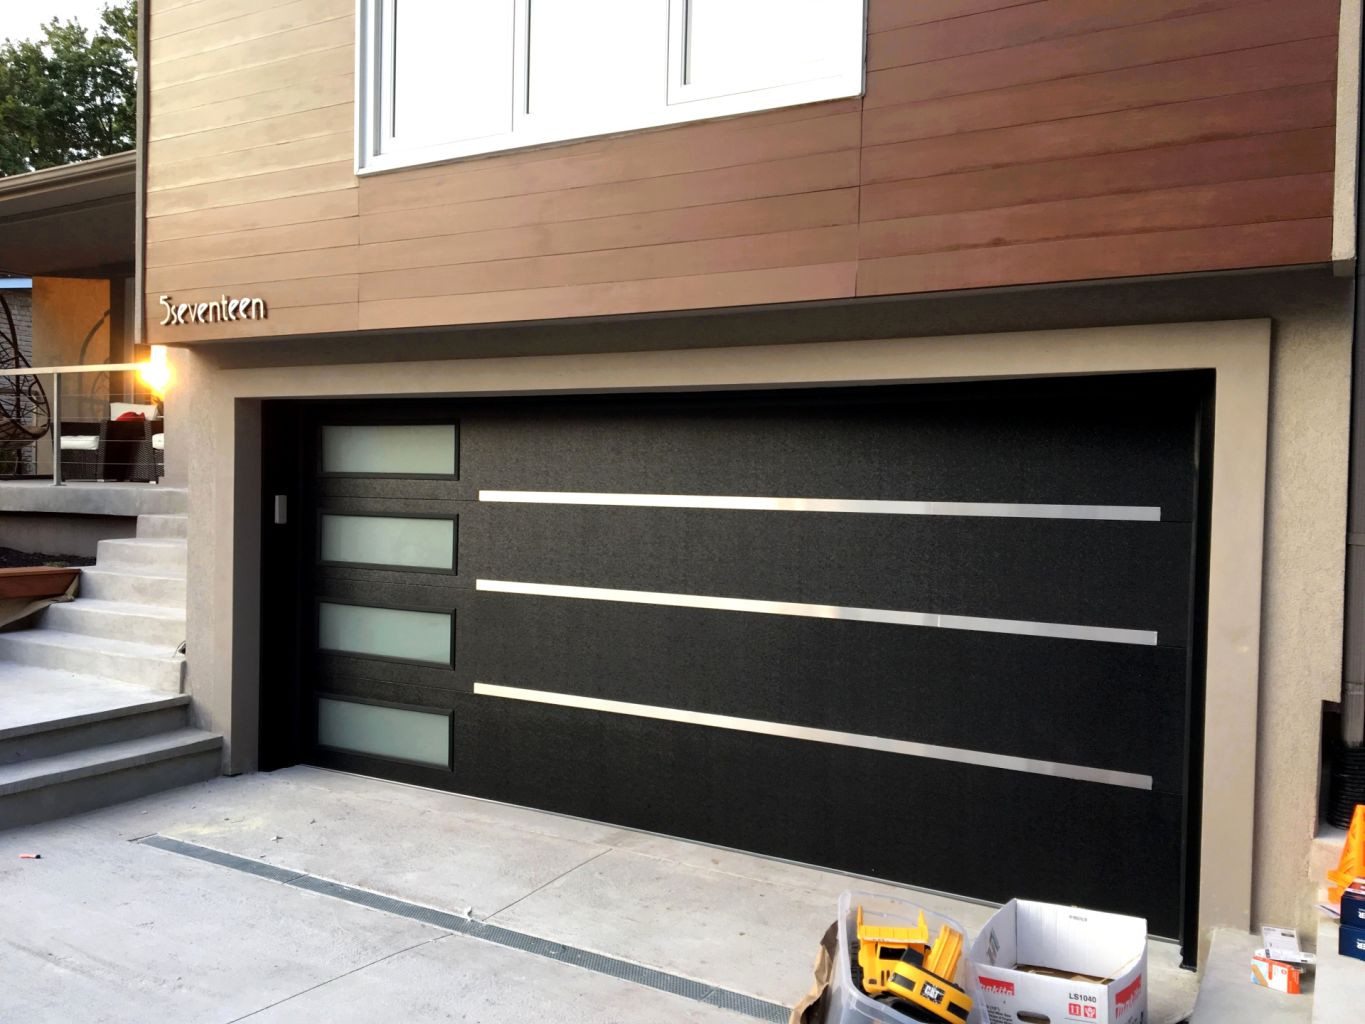 Cost to Install Hardwood Floors Homewyse Of Installation Page 2 Chaussureairrift Club Throughout Little Chamberlain Premium Garage Door Opener Price